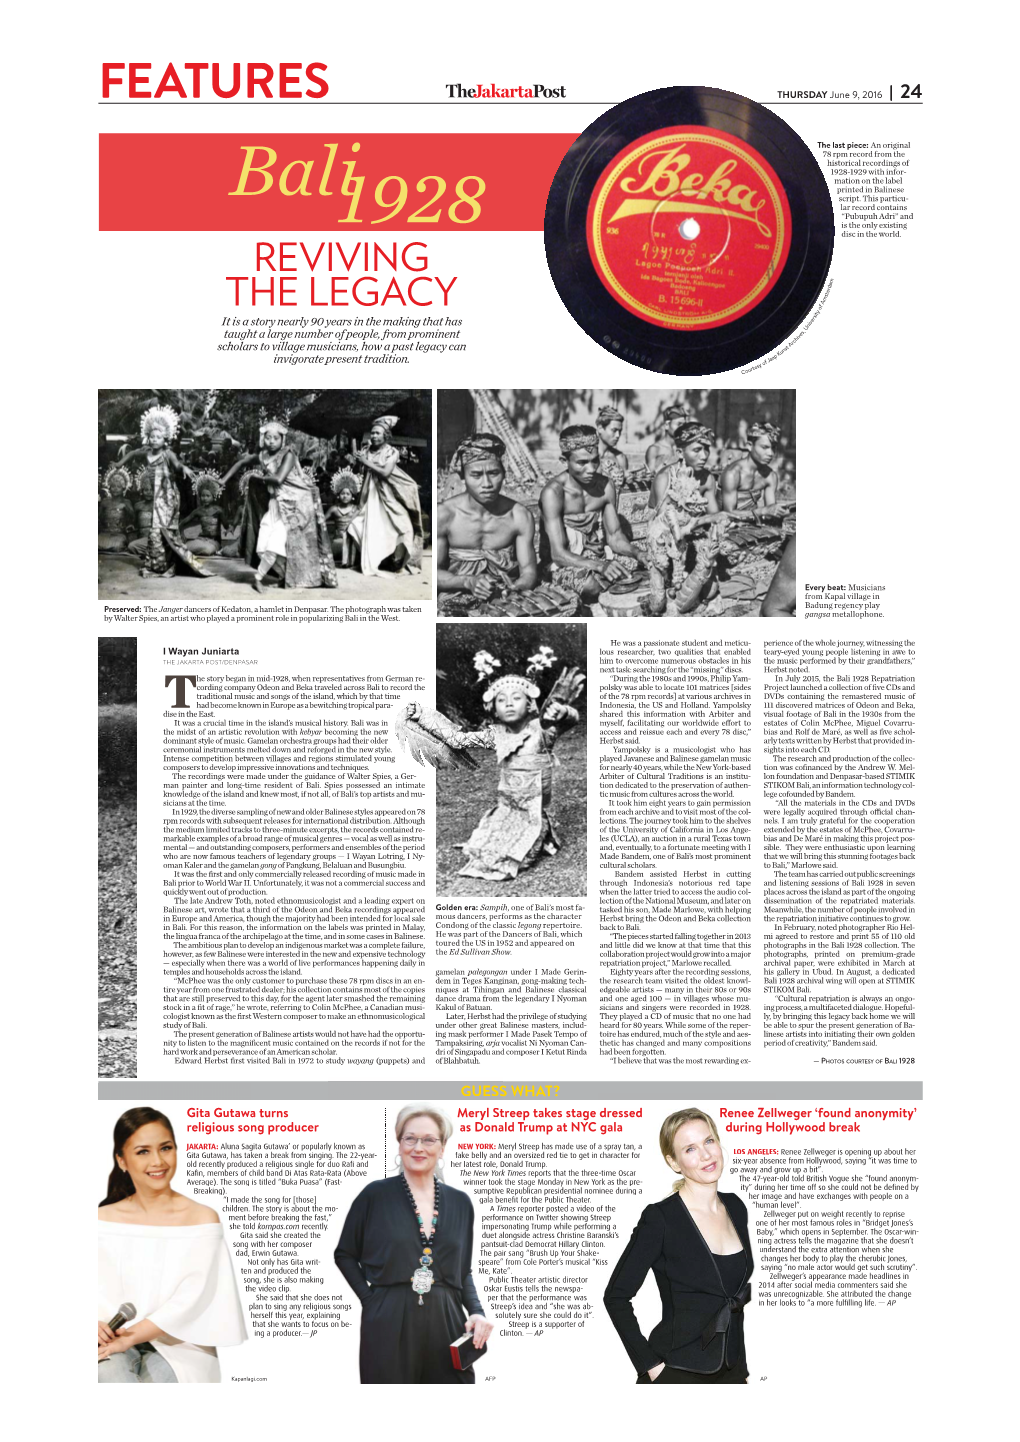 Jakarta Post on Bali 1928 Reviving the Legacy